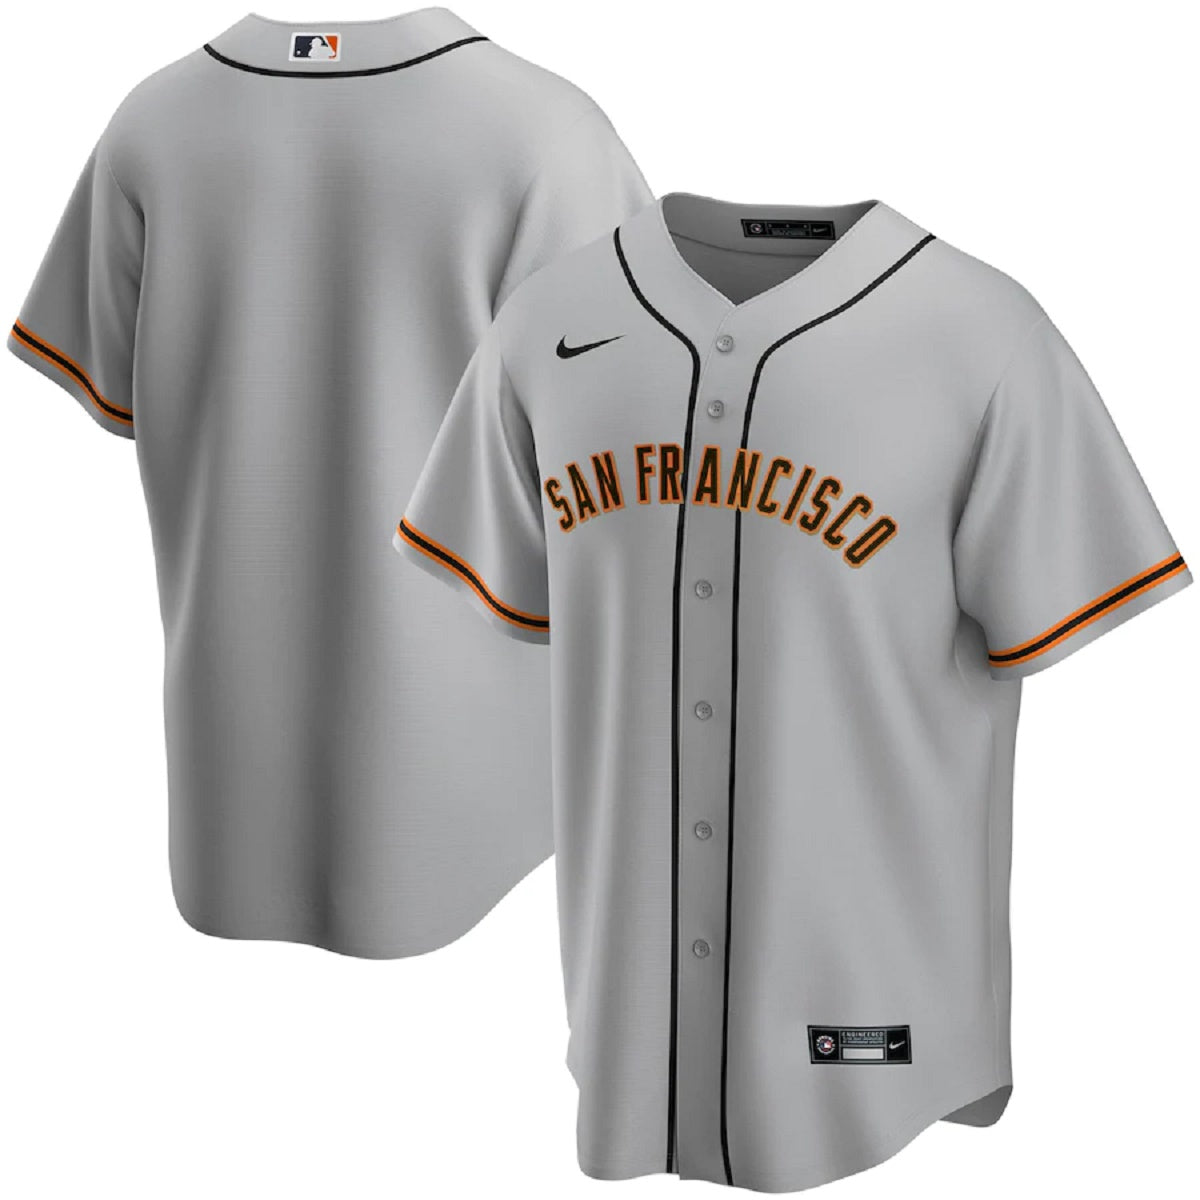 grey baseball uniforms